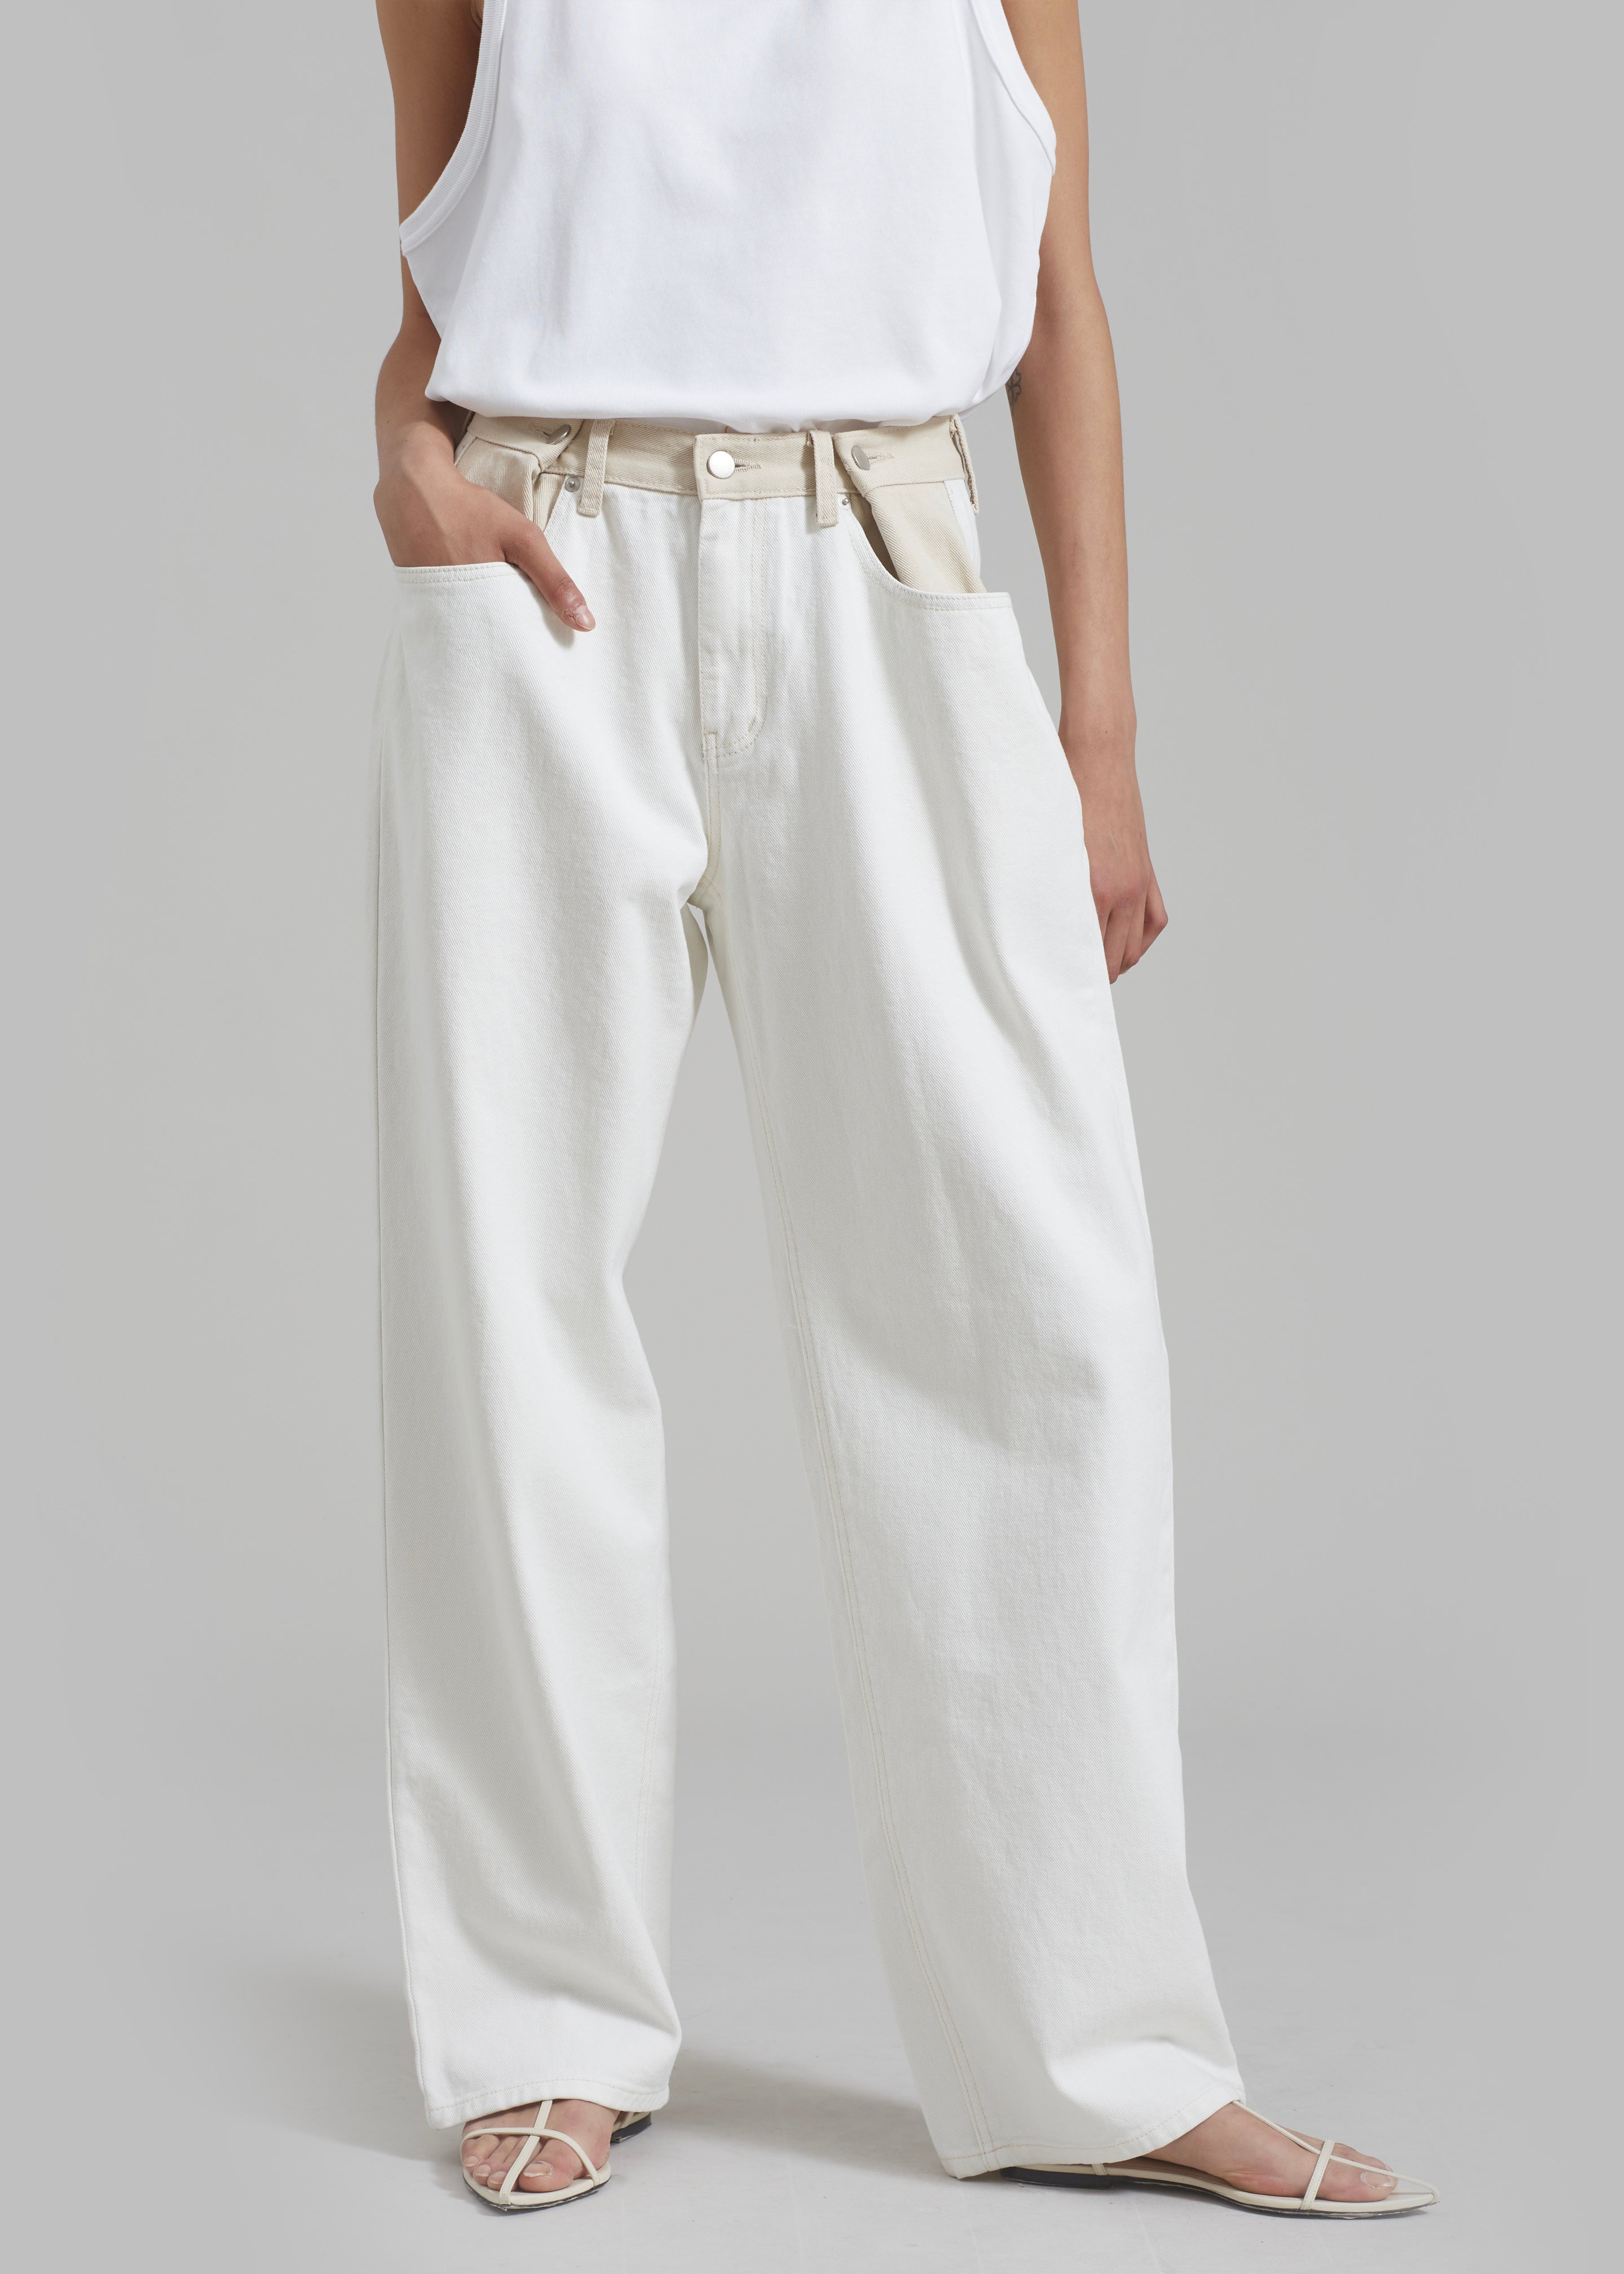 Hayla Contrast Denim Pants - Off White/Beige - 3